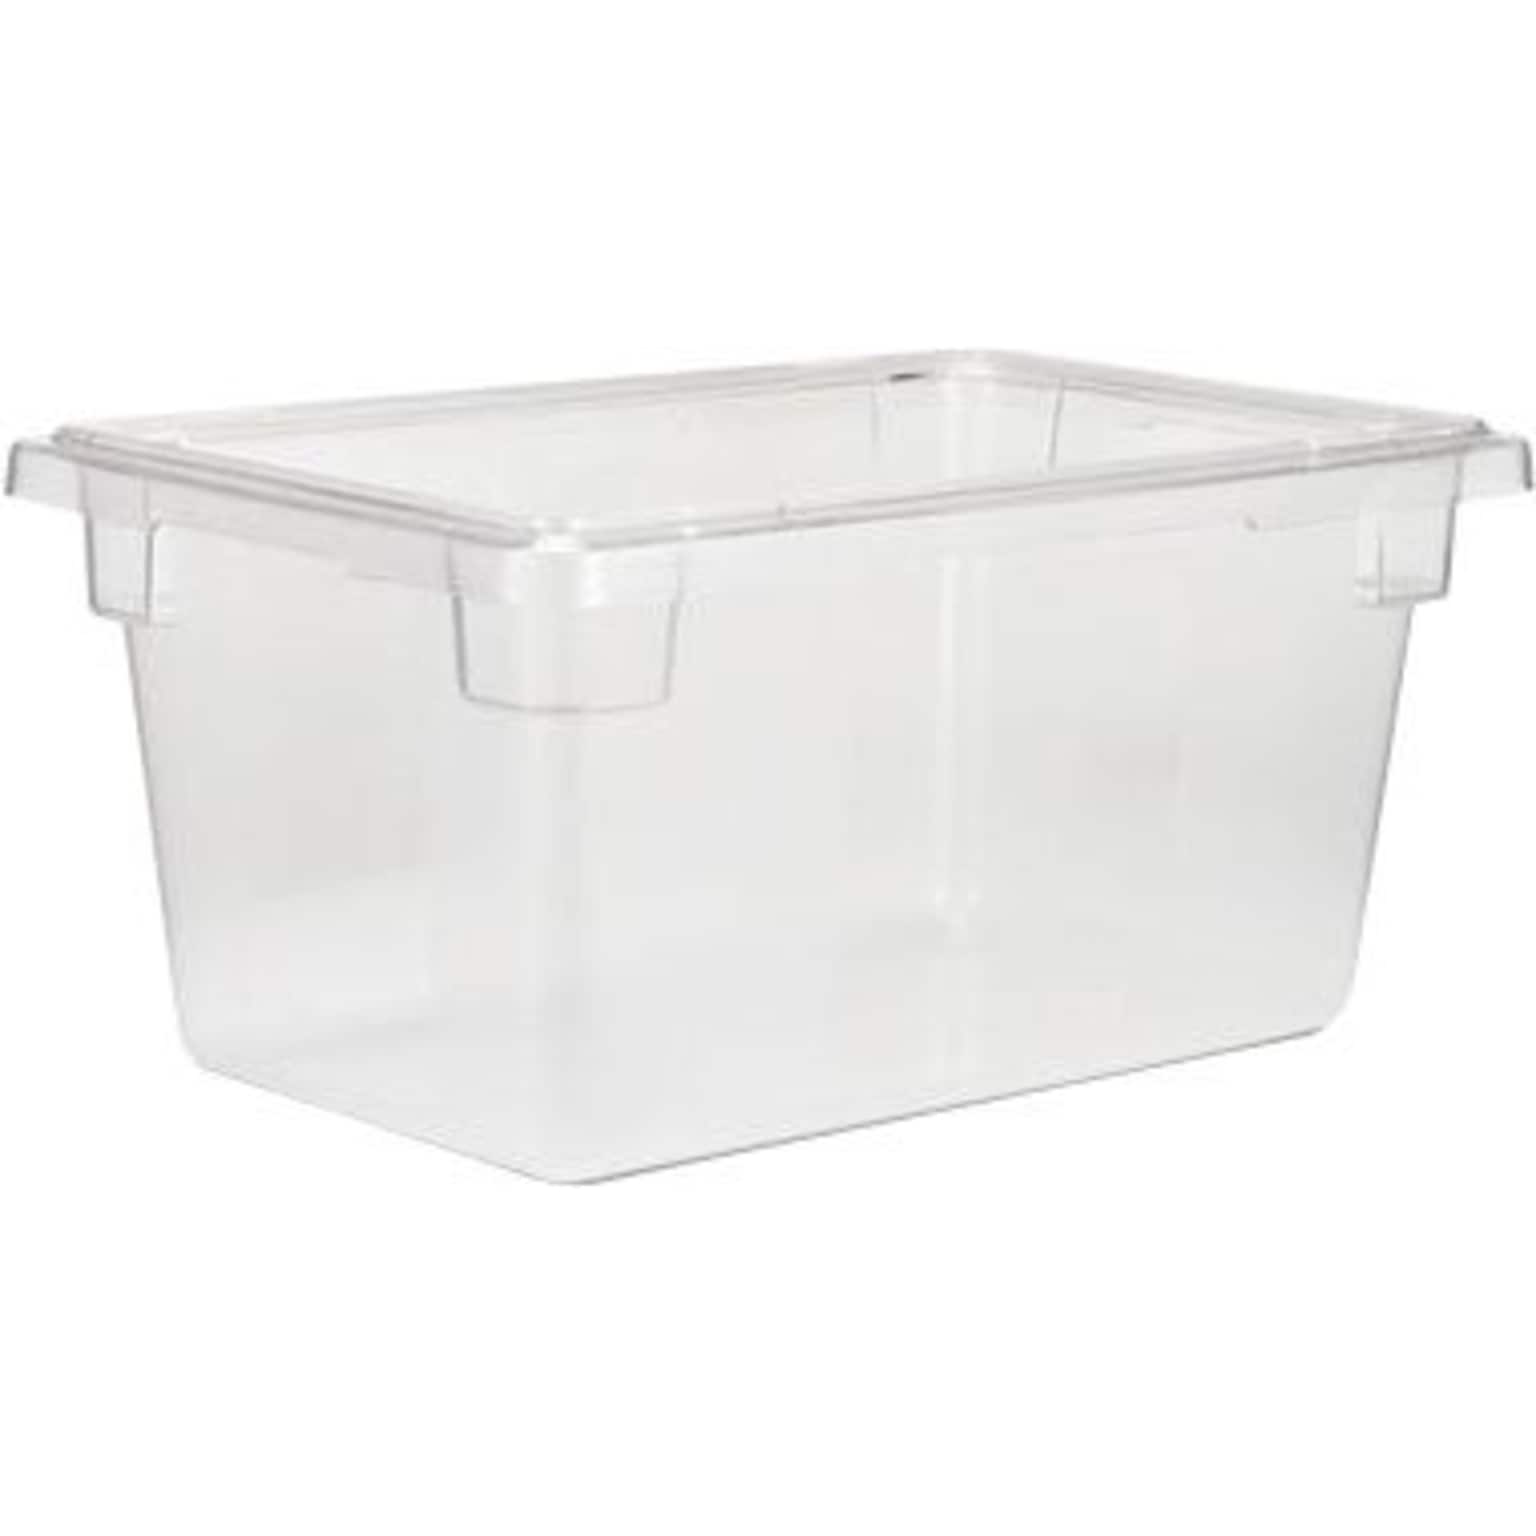 Rubbermaid® Clear Food/Tote Box, 5 Gallon